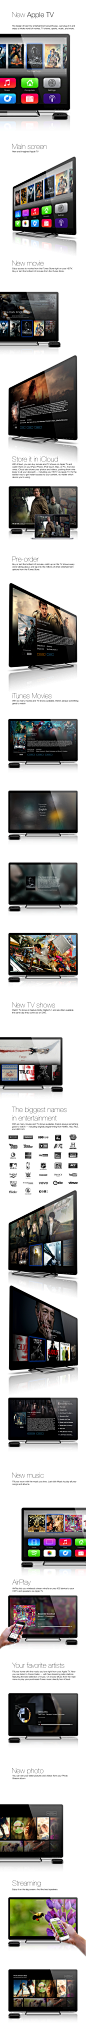 New Apple TV on Behance